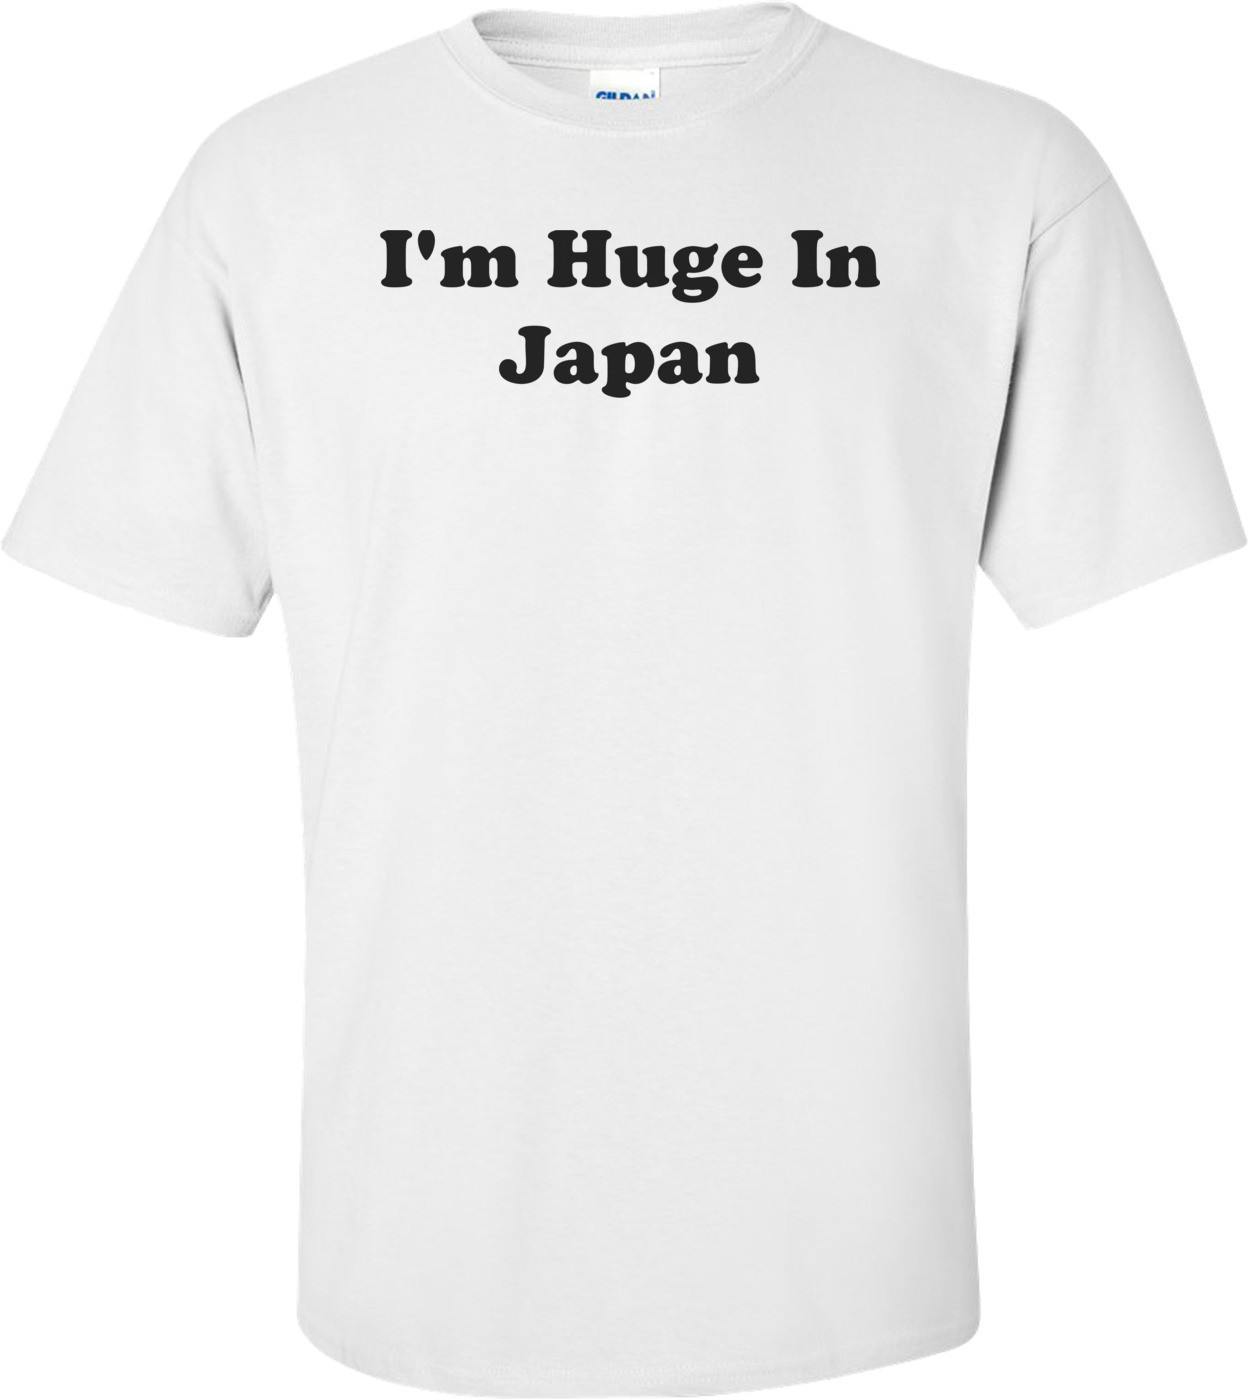 I'm Huge In Japan